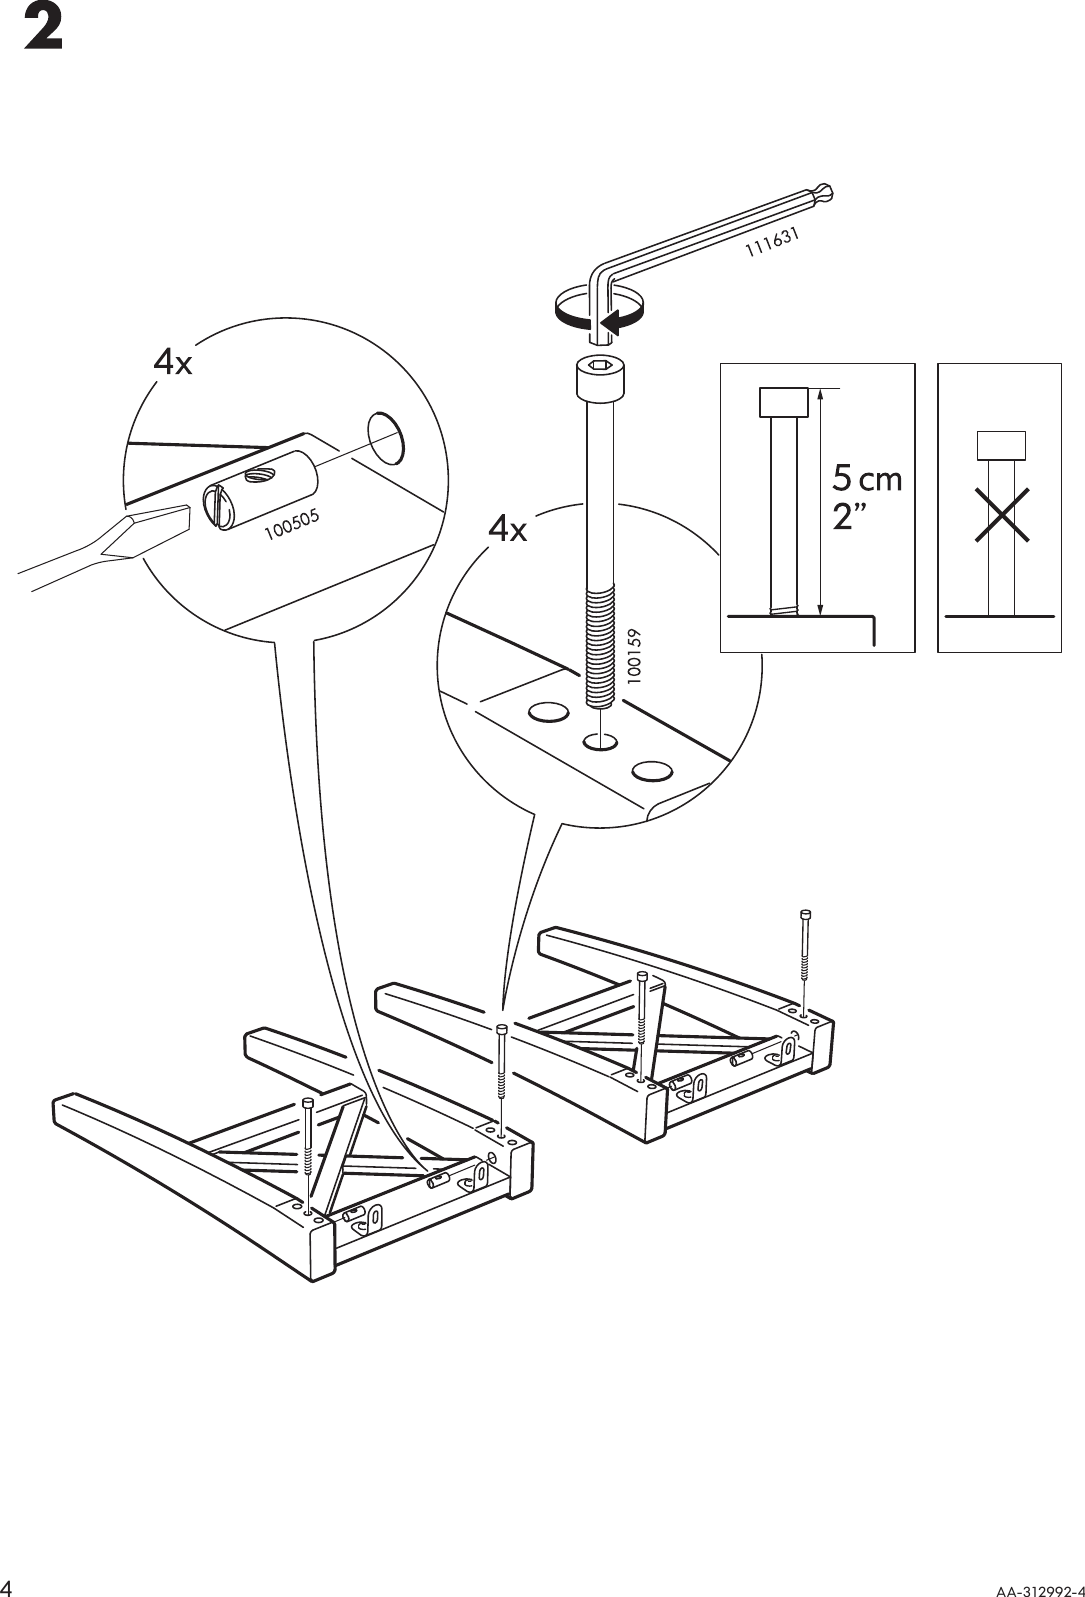 Page 4 of 8 - Ikea Ikea-Ingolf-Stool-Assembly-Instruction